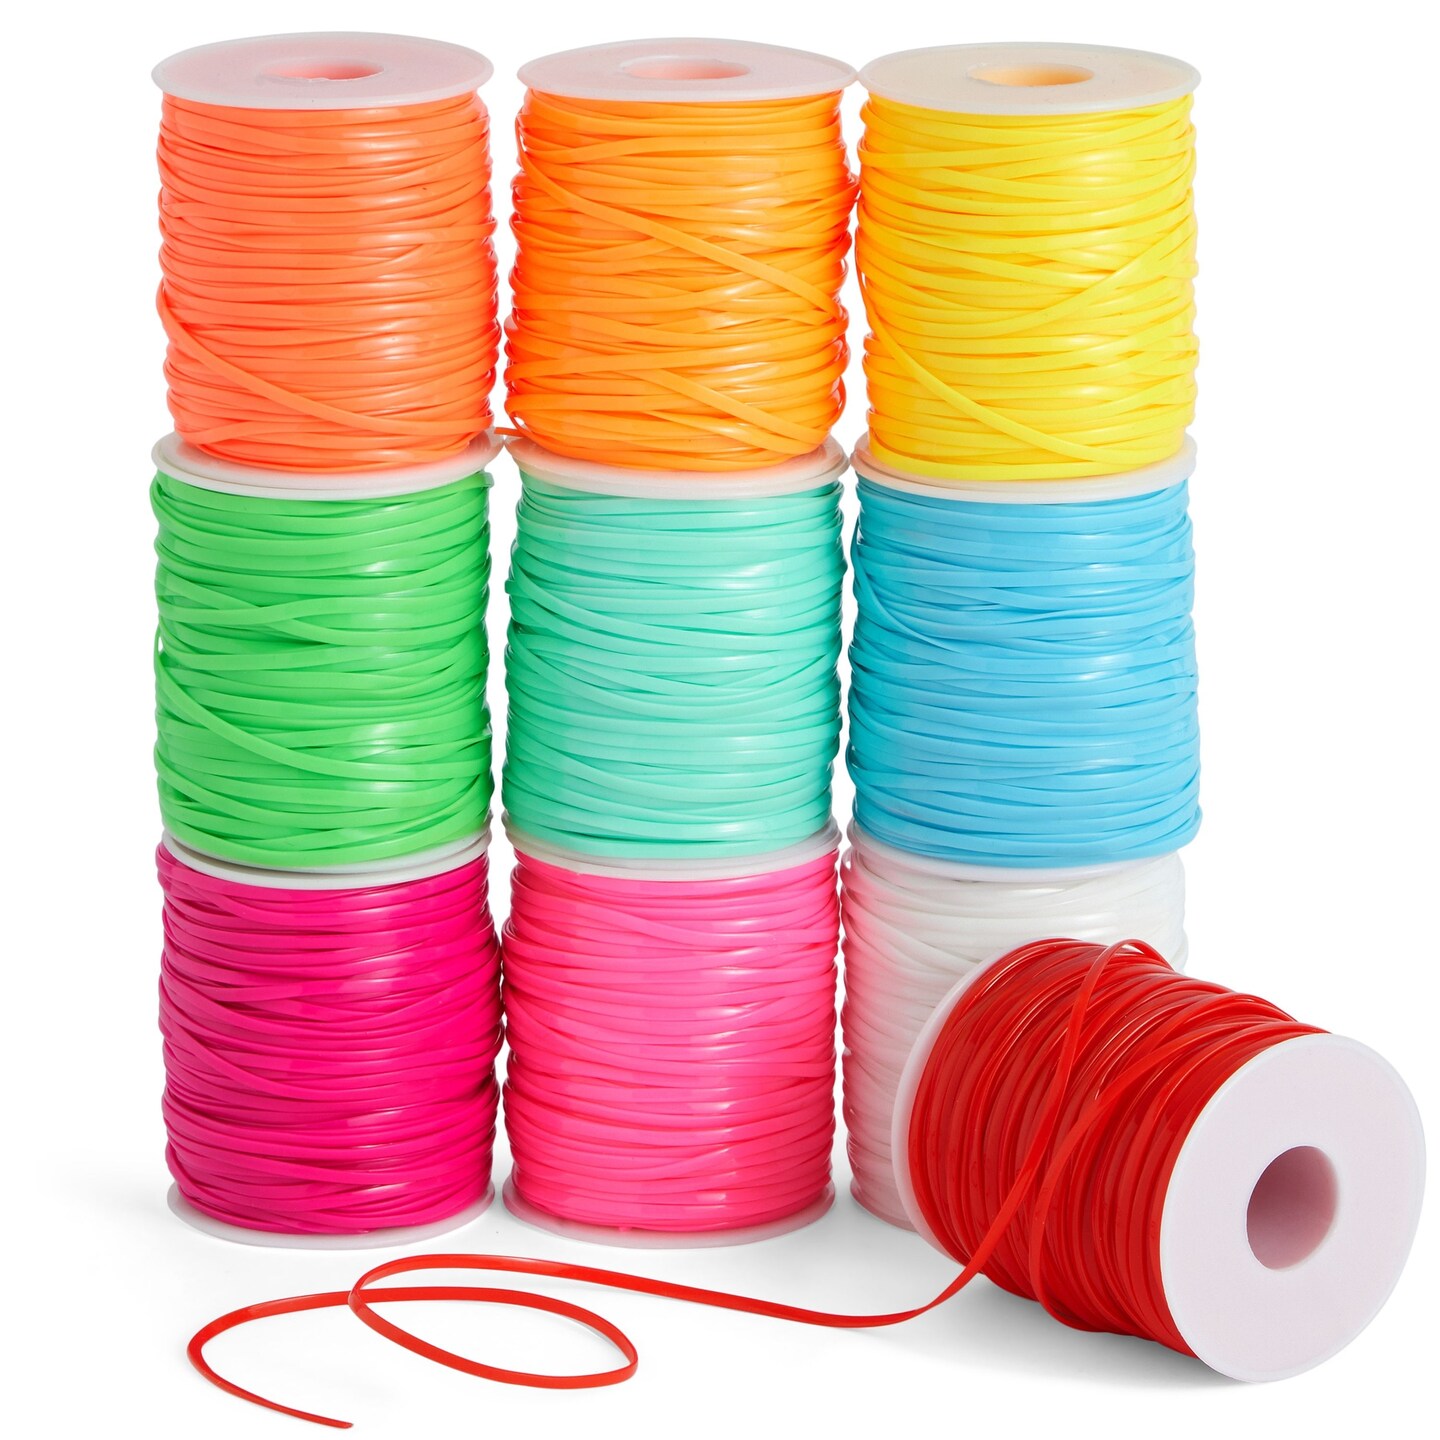 Clear Green Plastic Craft Lace Lanyard Gimp String Bulk 100 Yard